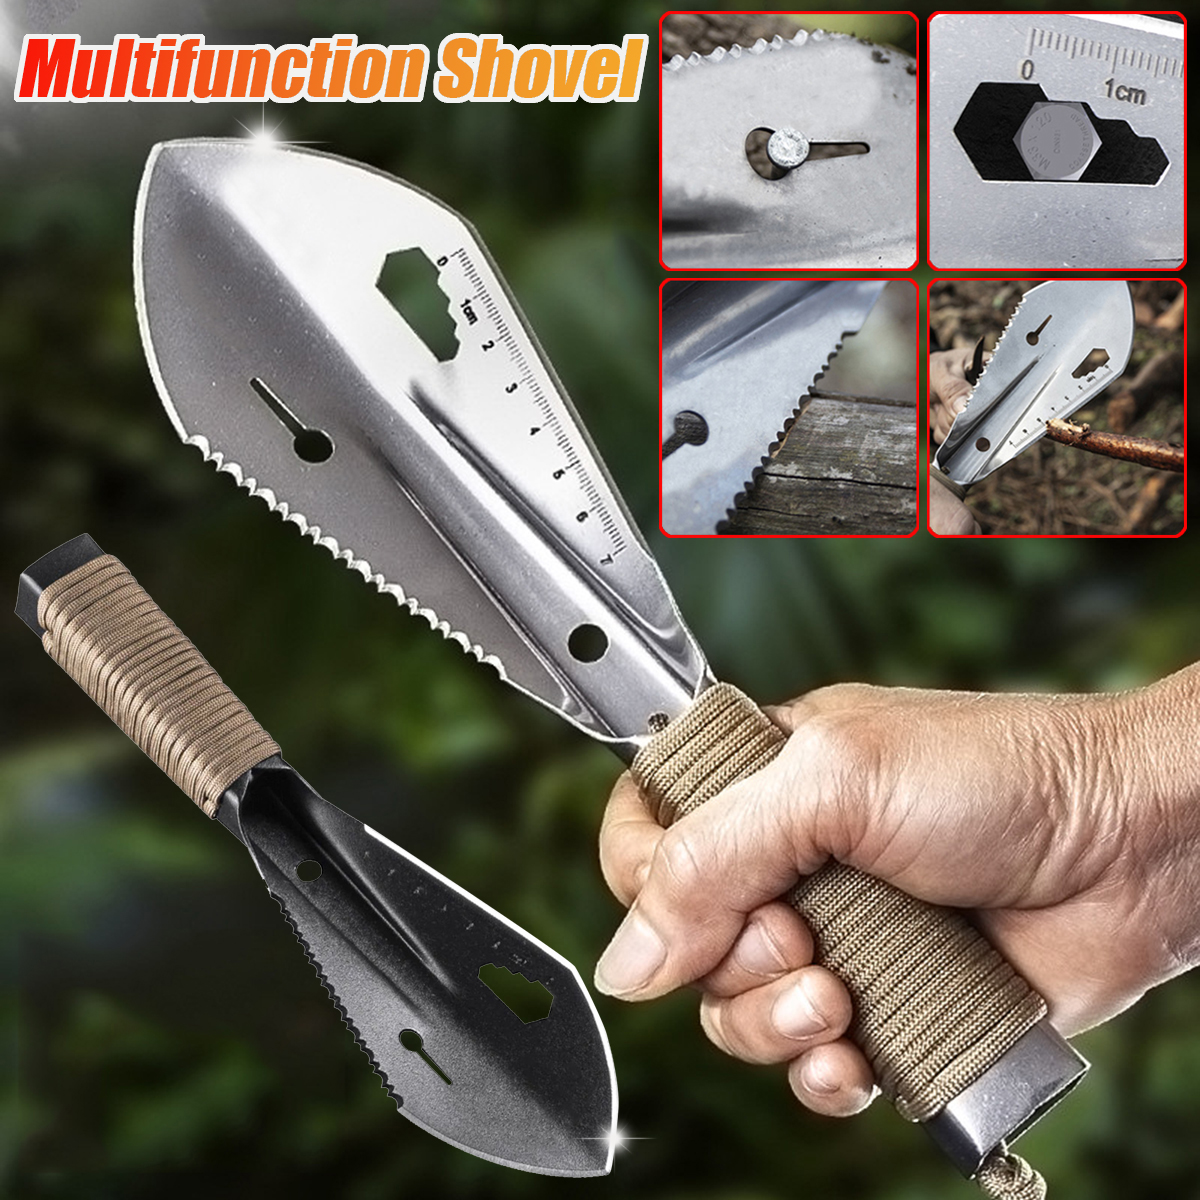 Multifunction-Stainless-Steel-Shovel-Trowel-Garden-Camping-Hiking-Shovel-Outdoor-Army-Shovel-1639383-1